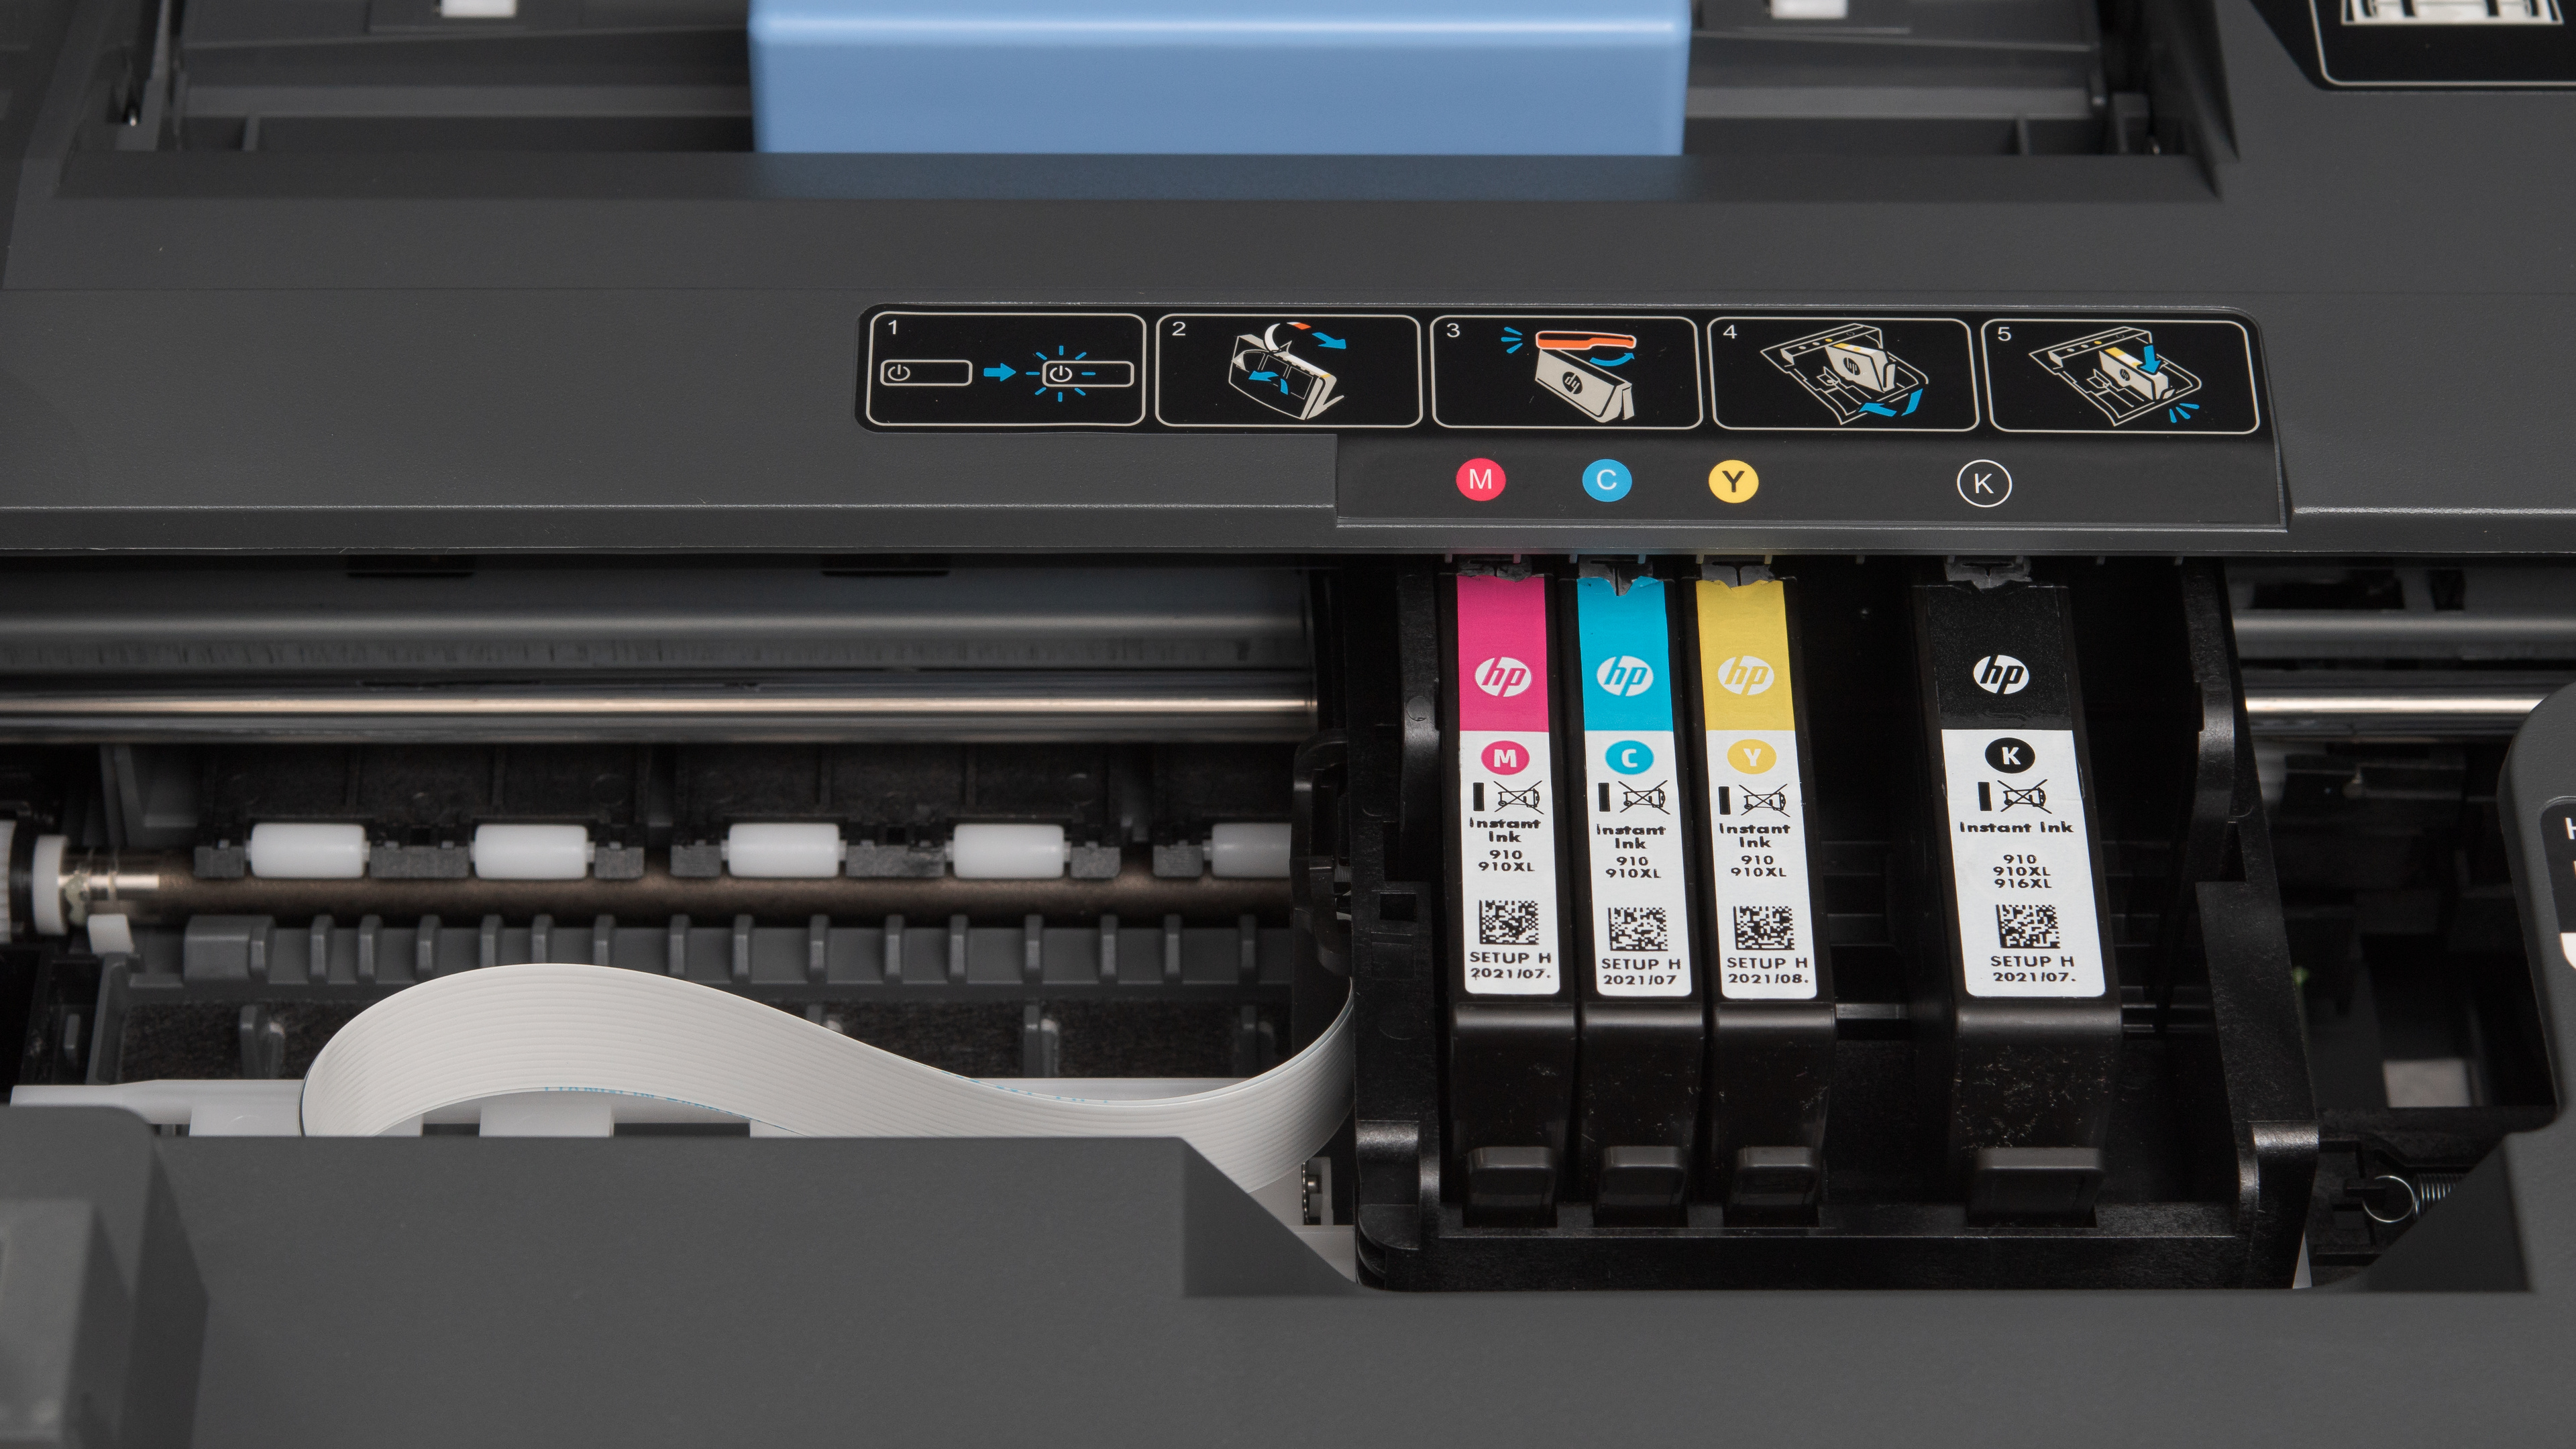 Our Printer Design Tests: Cartridge